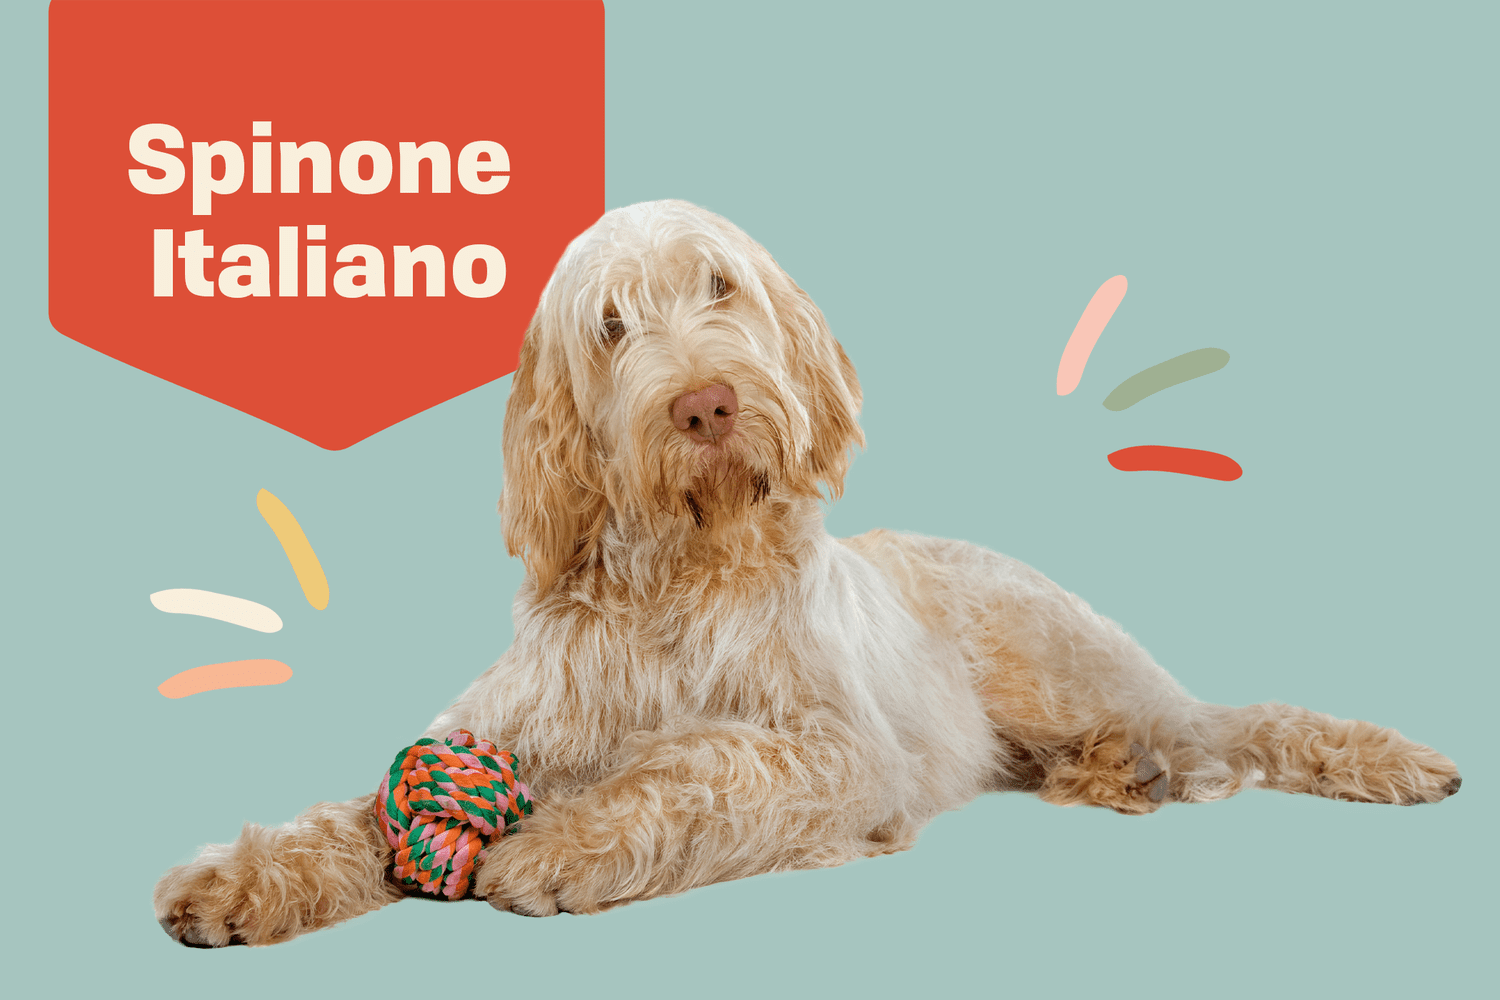 spinone italiano dog breed profile treatment